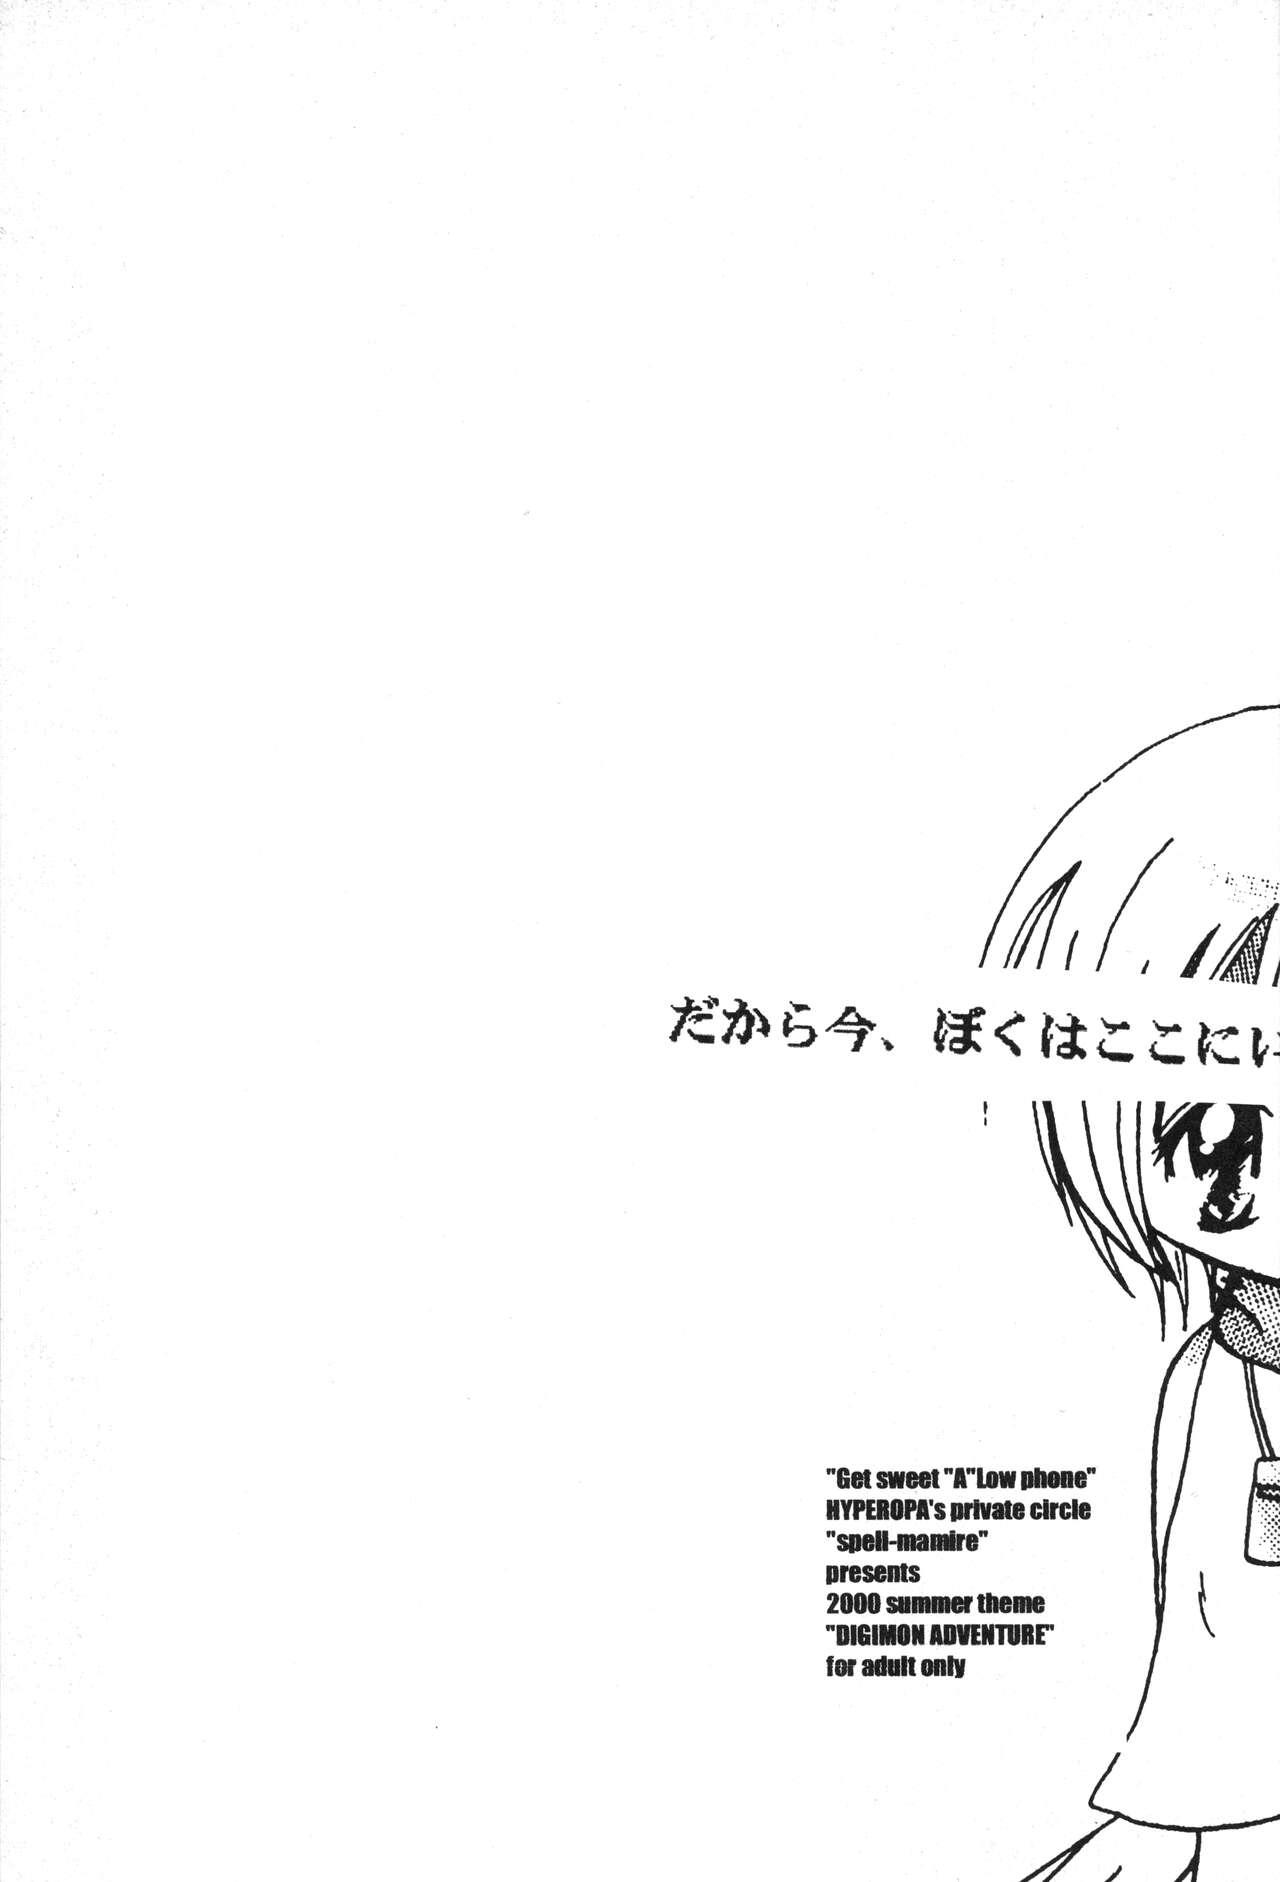 Nudity Get Sweet ”A” Low Phone ”DIGIMON ADVENTURE” - Digimon Cartoon - Page 3